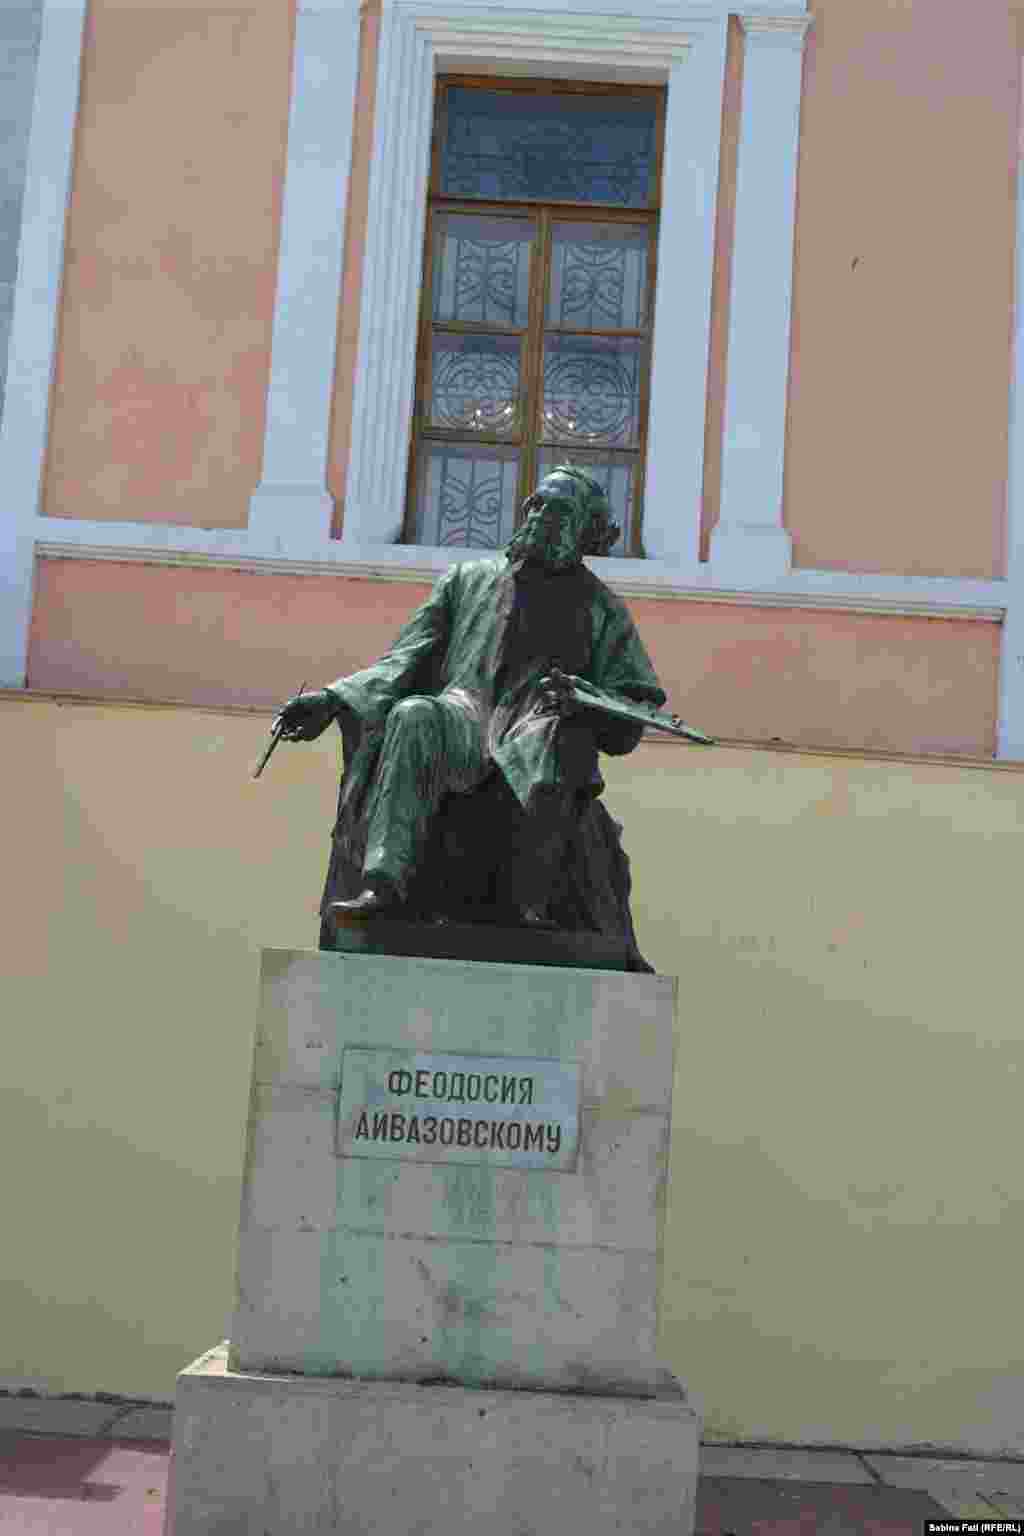 Feodosia, Crimeea 2016. Statuia pictorului Ivan Aivazovski (1817 - 1900).